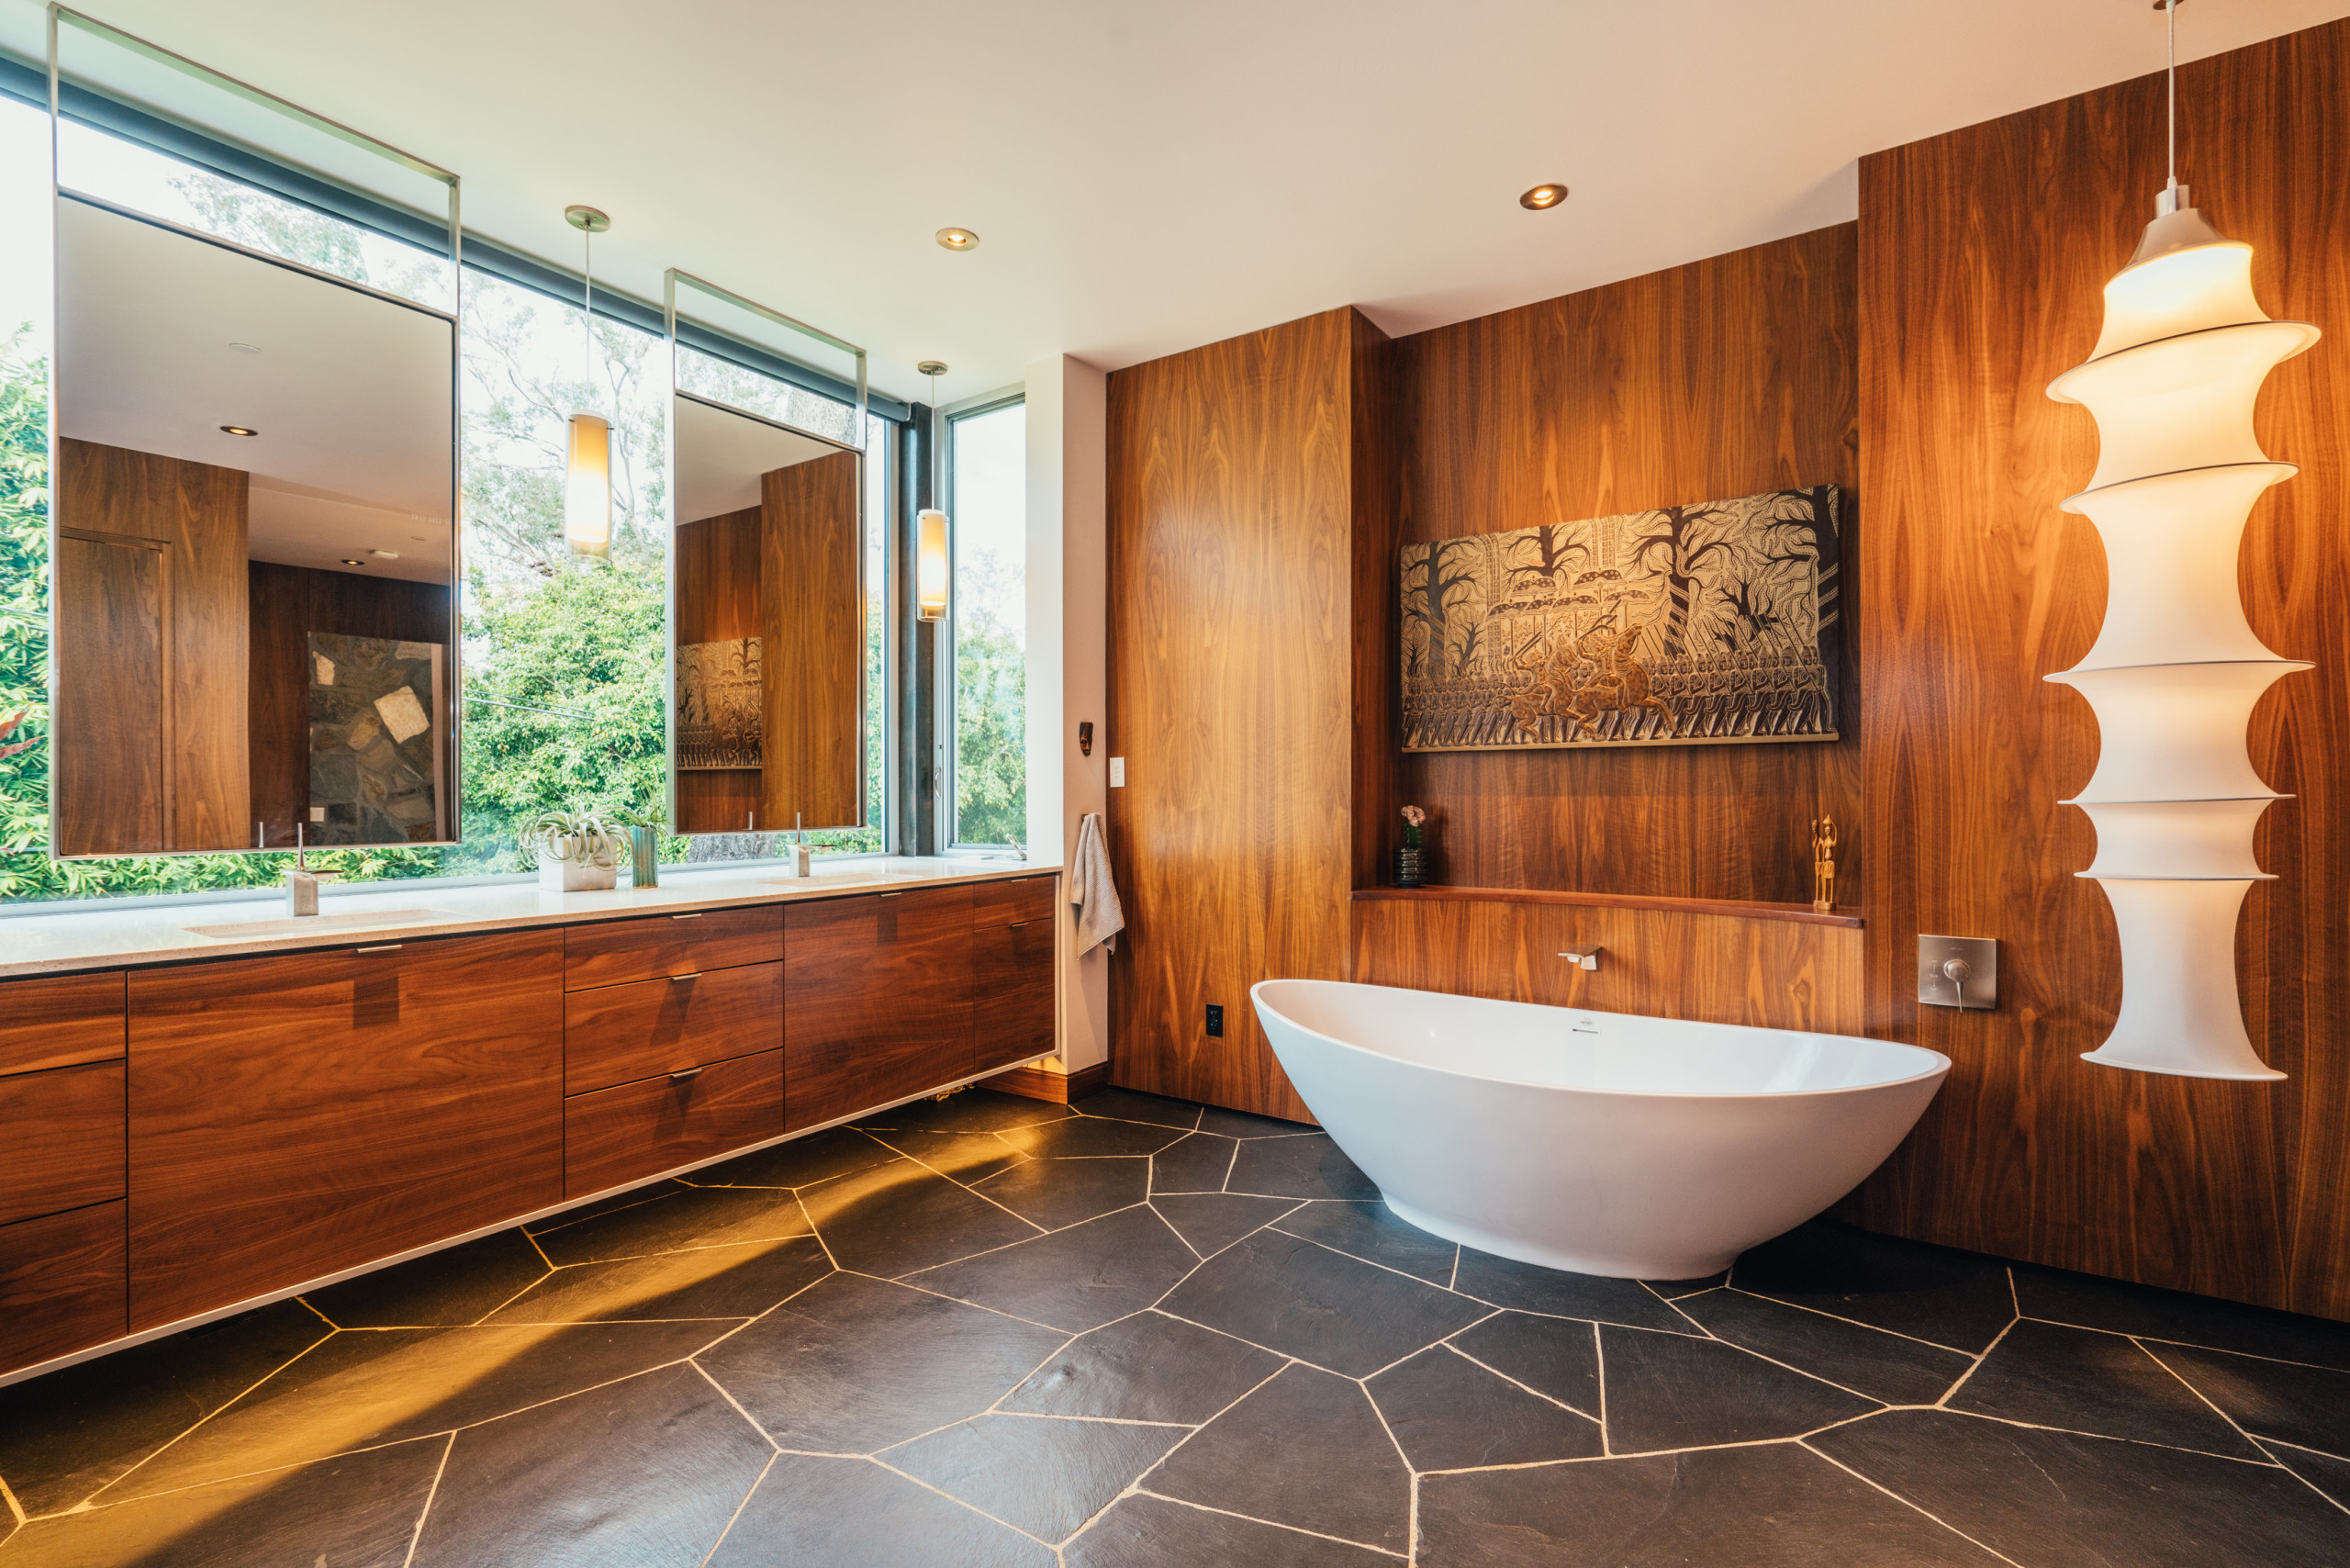 20 Impressive MidCentury Modern Bathroom Designs You Must See